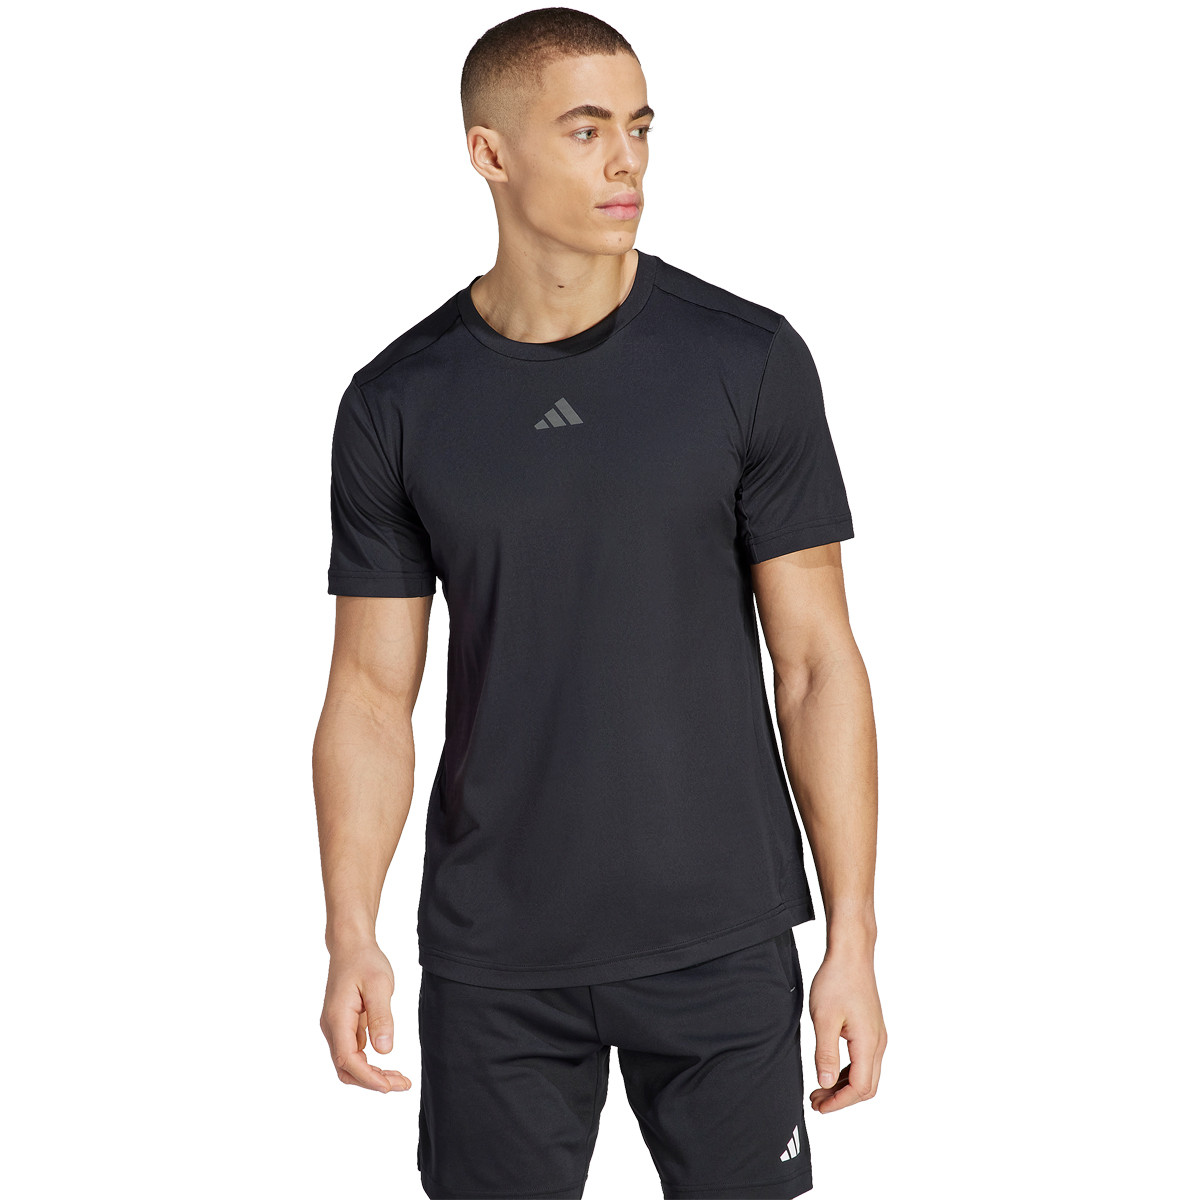 Débardeur graphique adidas Aeroready HIIT - T-shirts - Homme - Fitness